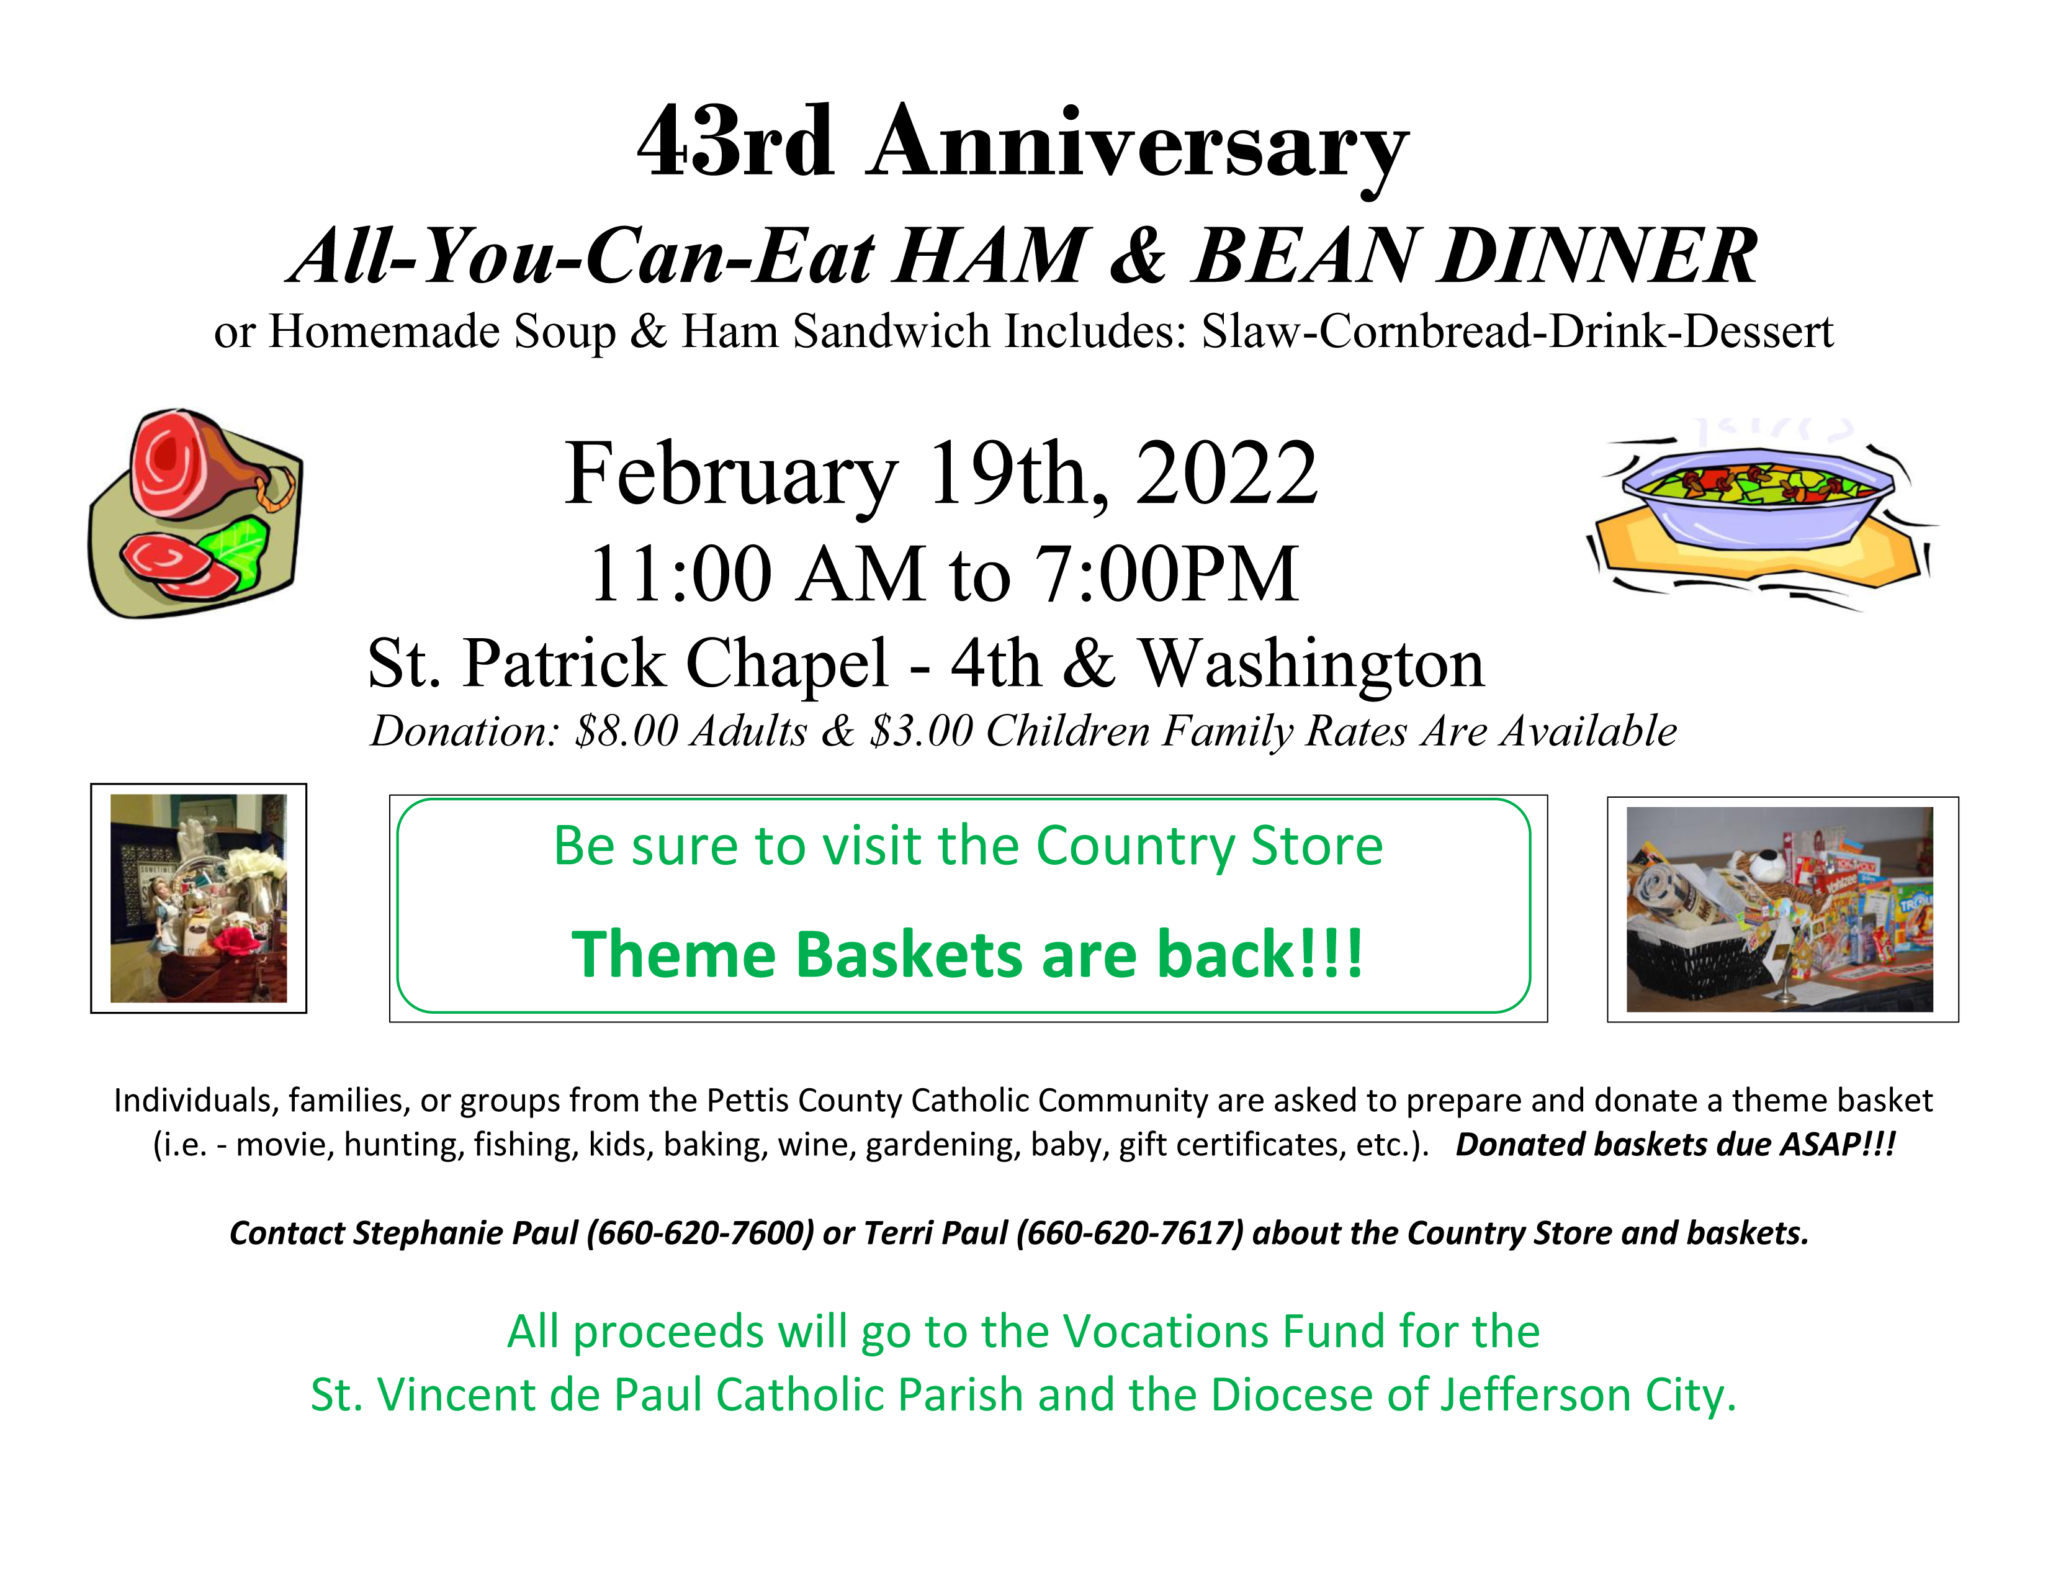 43rd Anniversary Ham & Bean Dinner Flier Copy